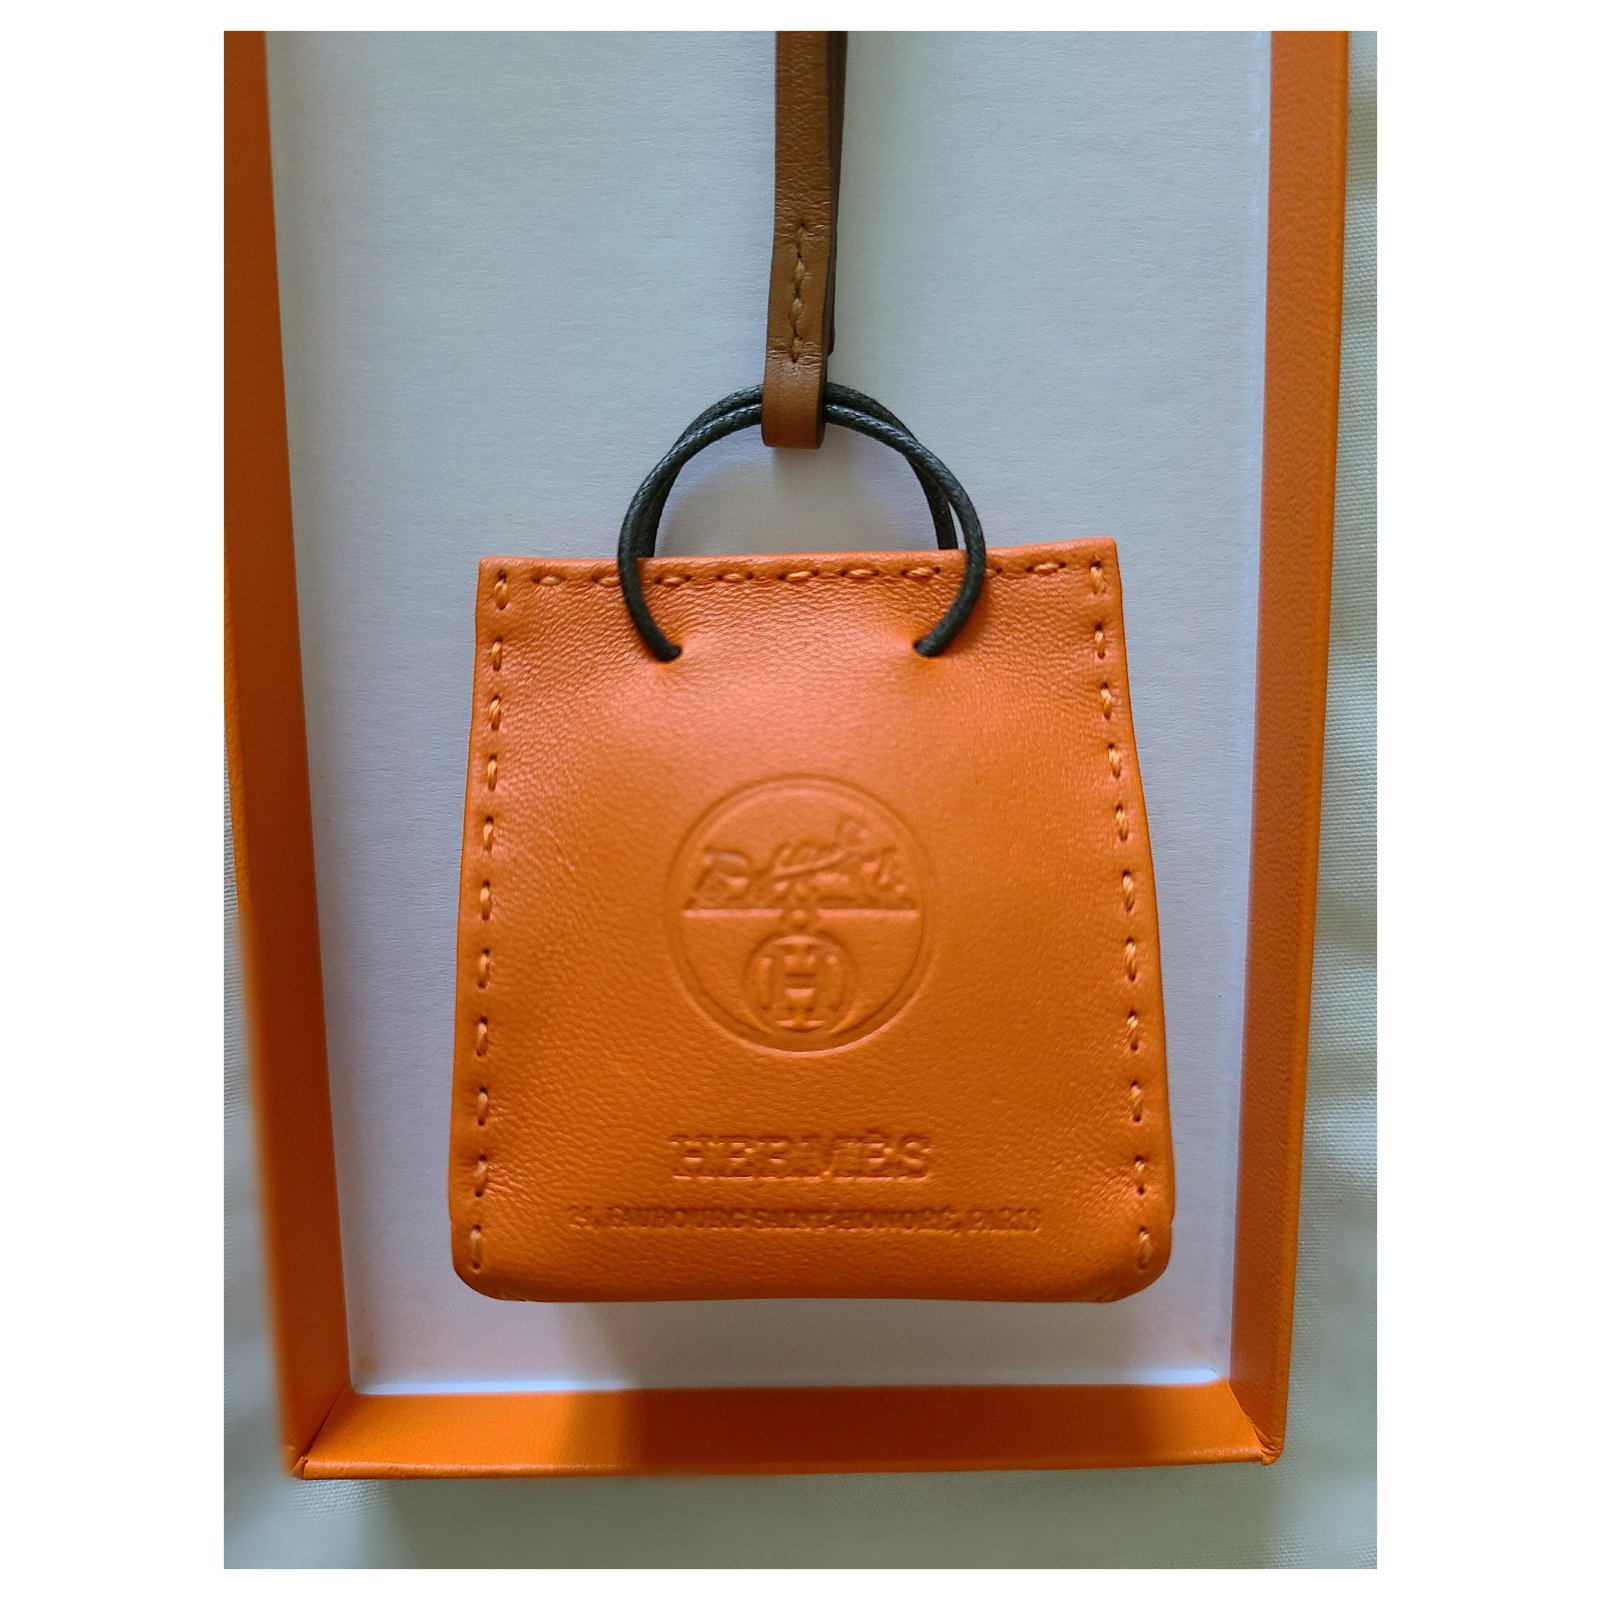 Hermès Orange Shopping Bag Charm, Handbags & Accessories Online, Ecommerce Retail